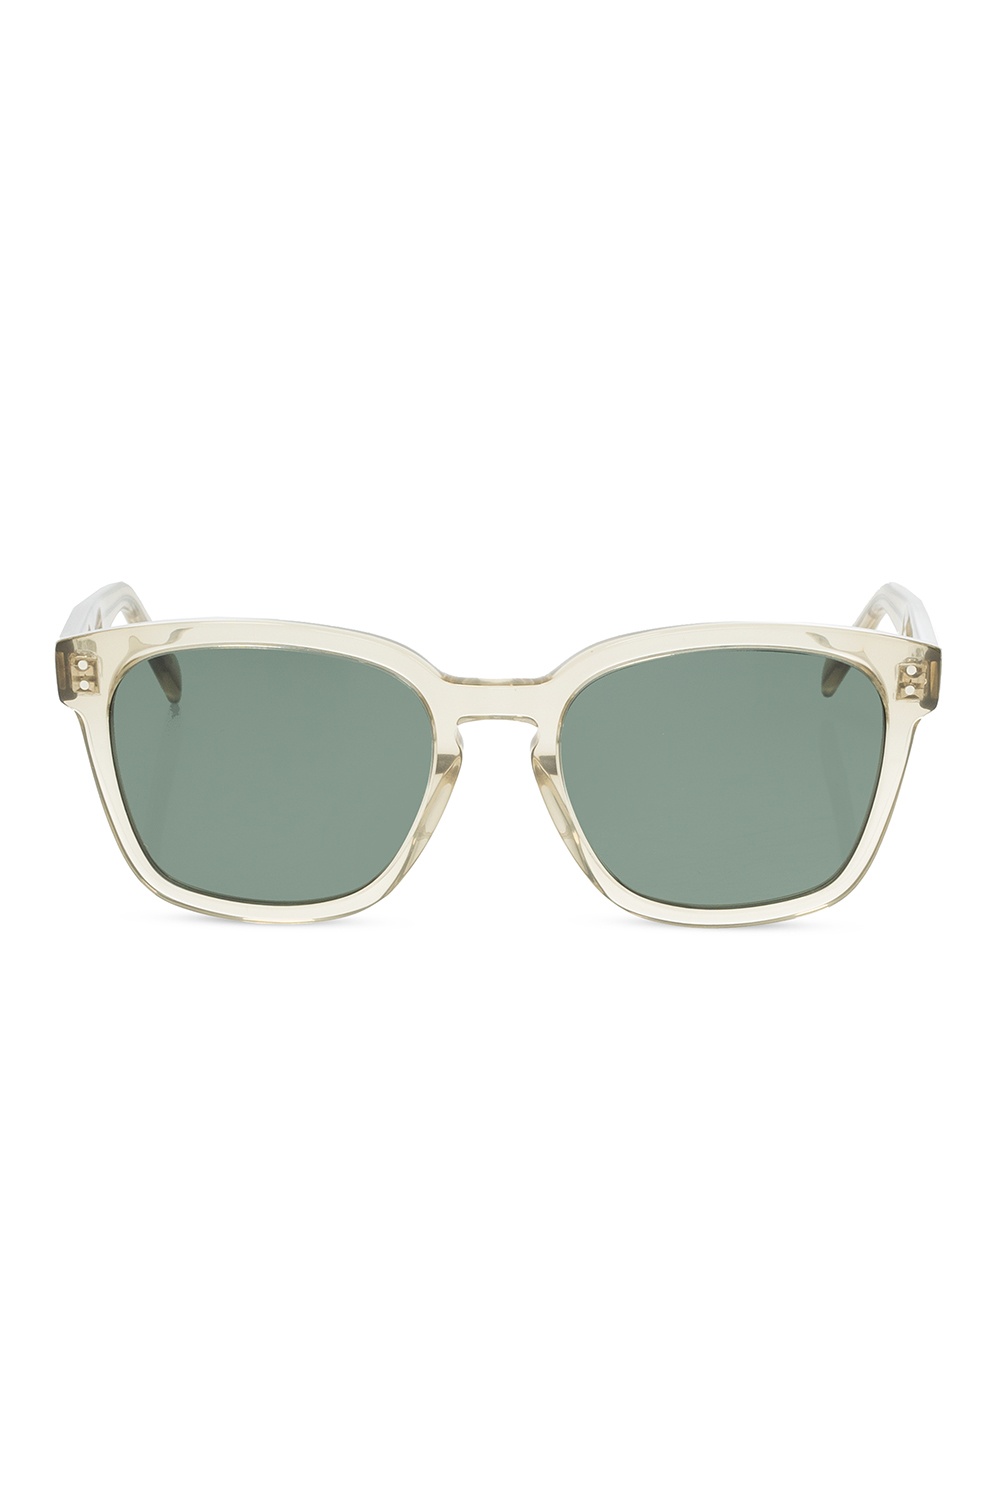 Celine Branded sunglasses